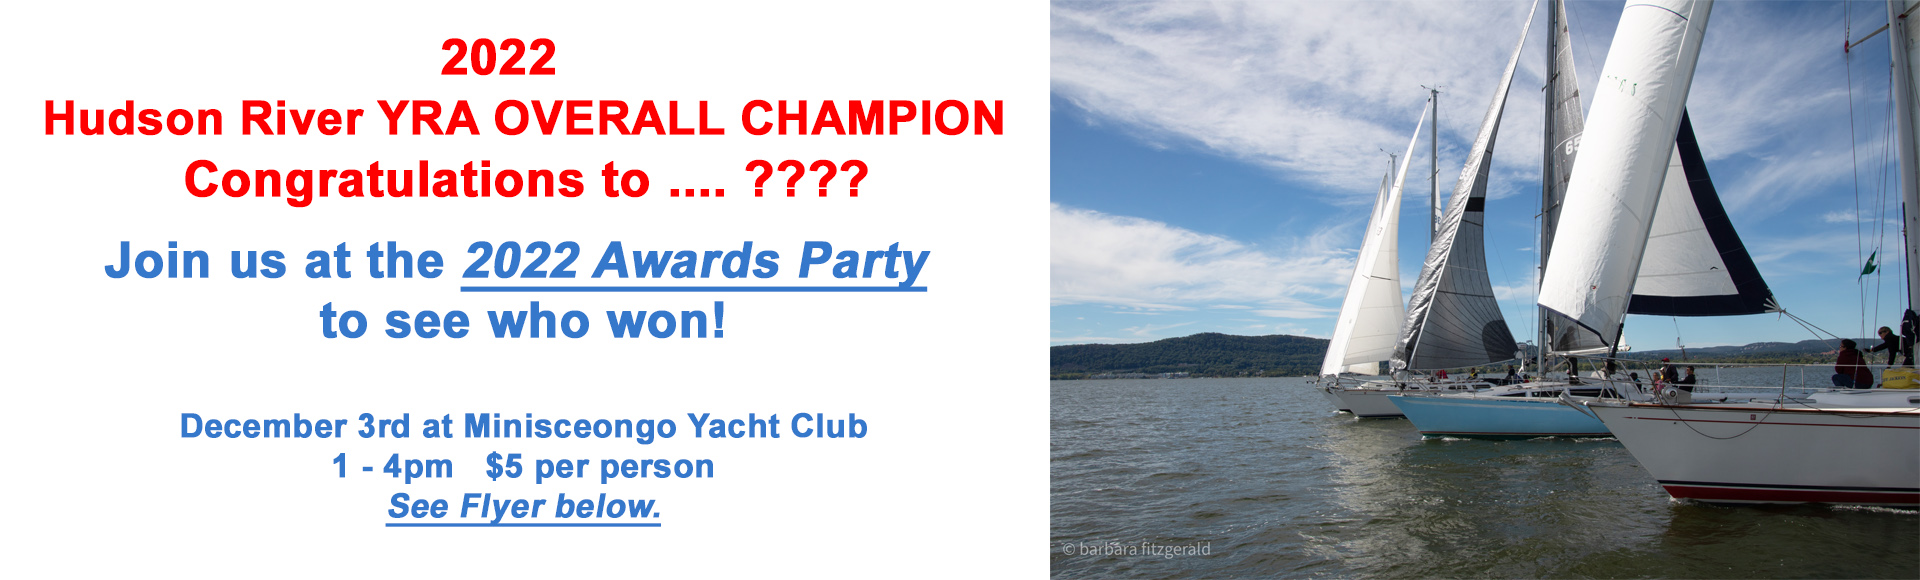 hudson river yacht racing association